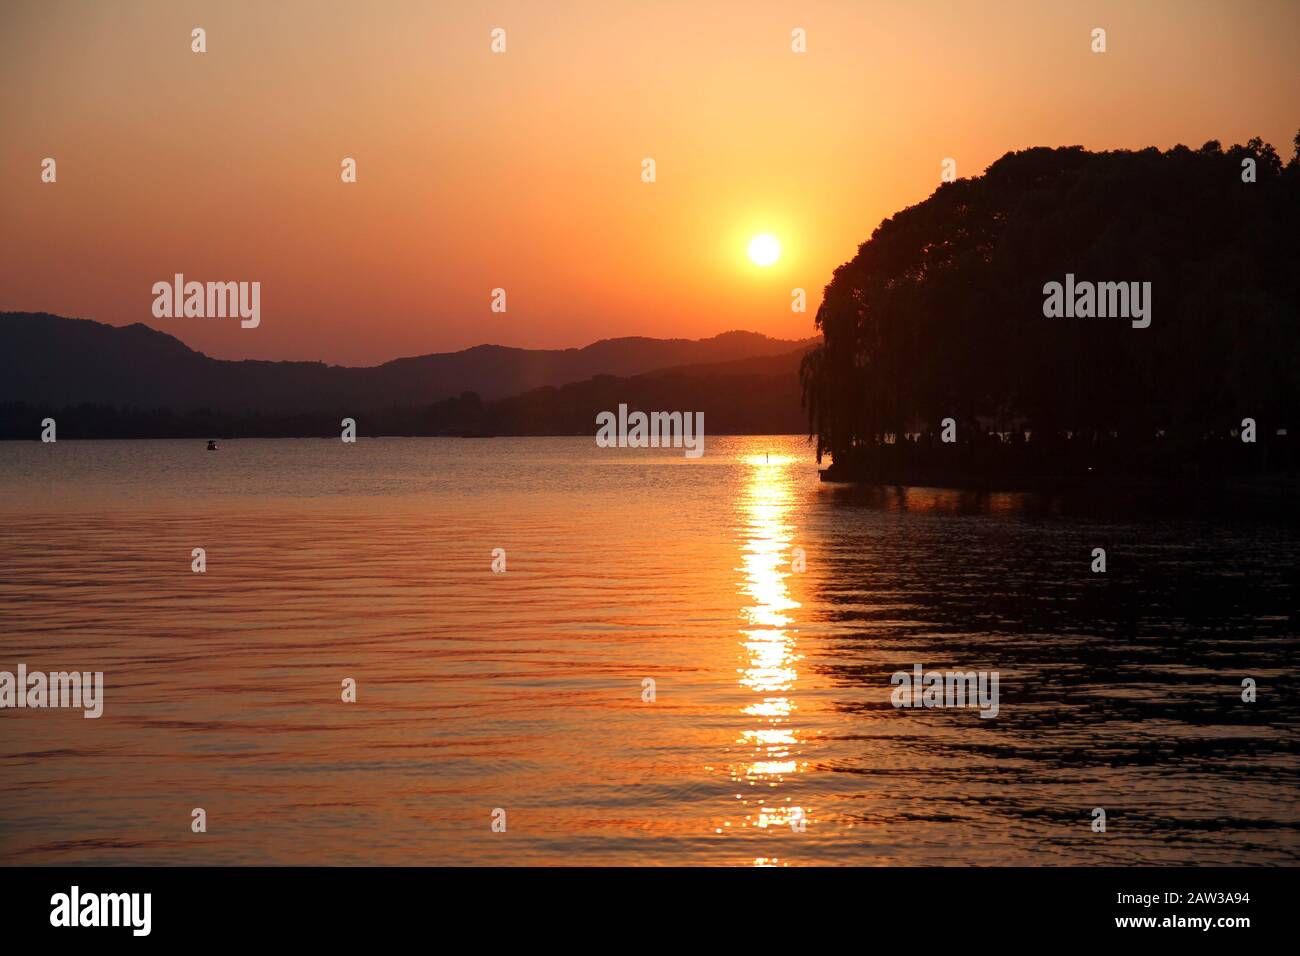 Sunset on the beautiful Hangzhou lake in China Stock Photo